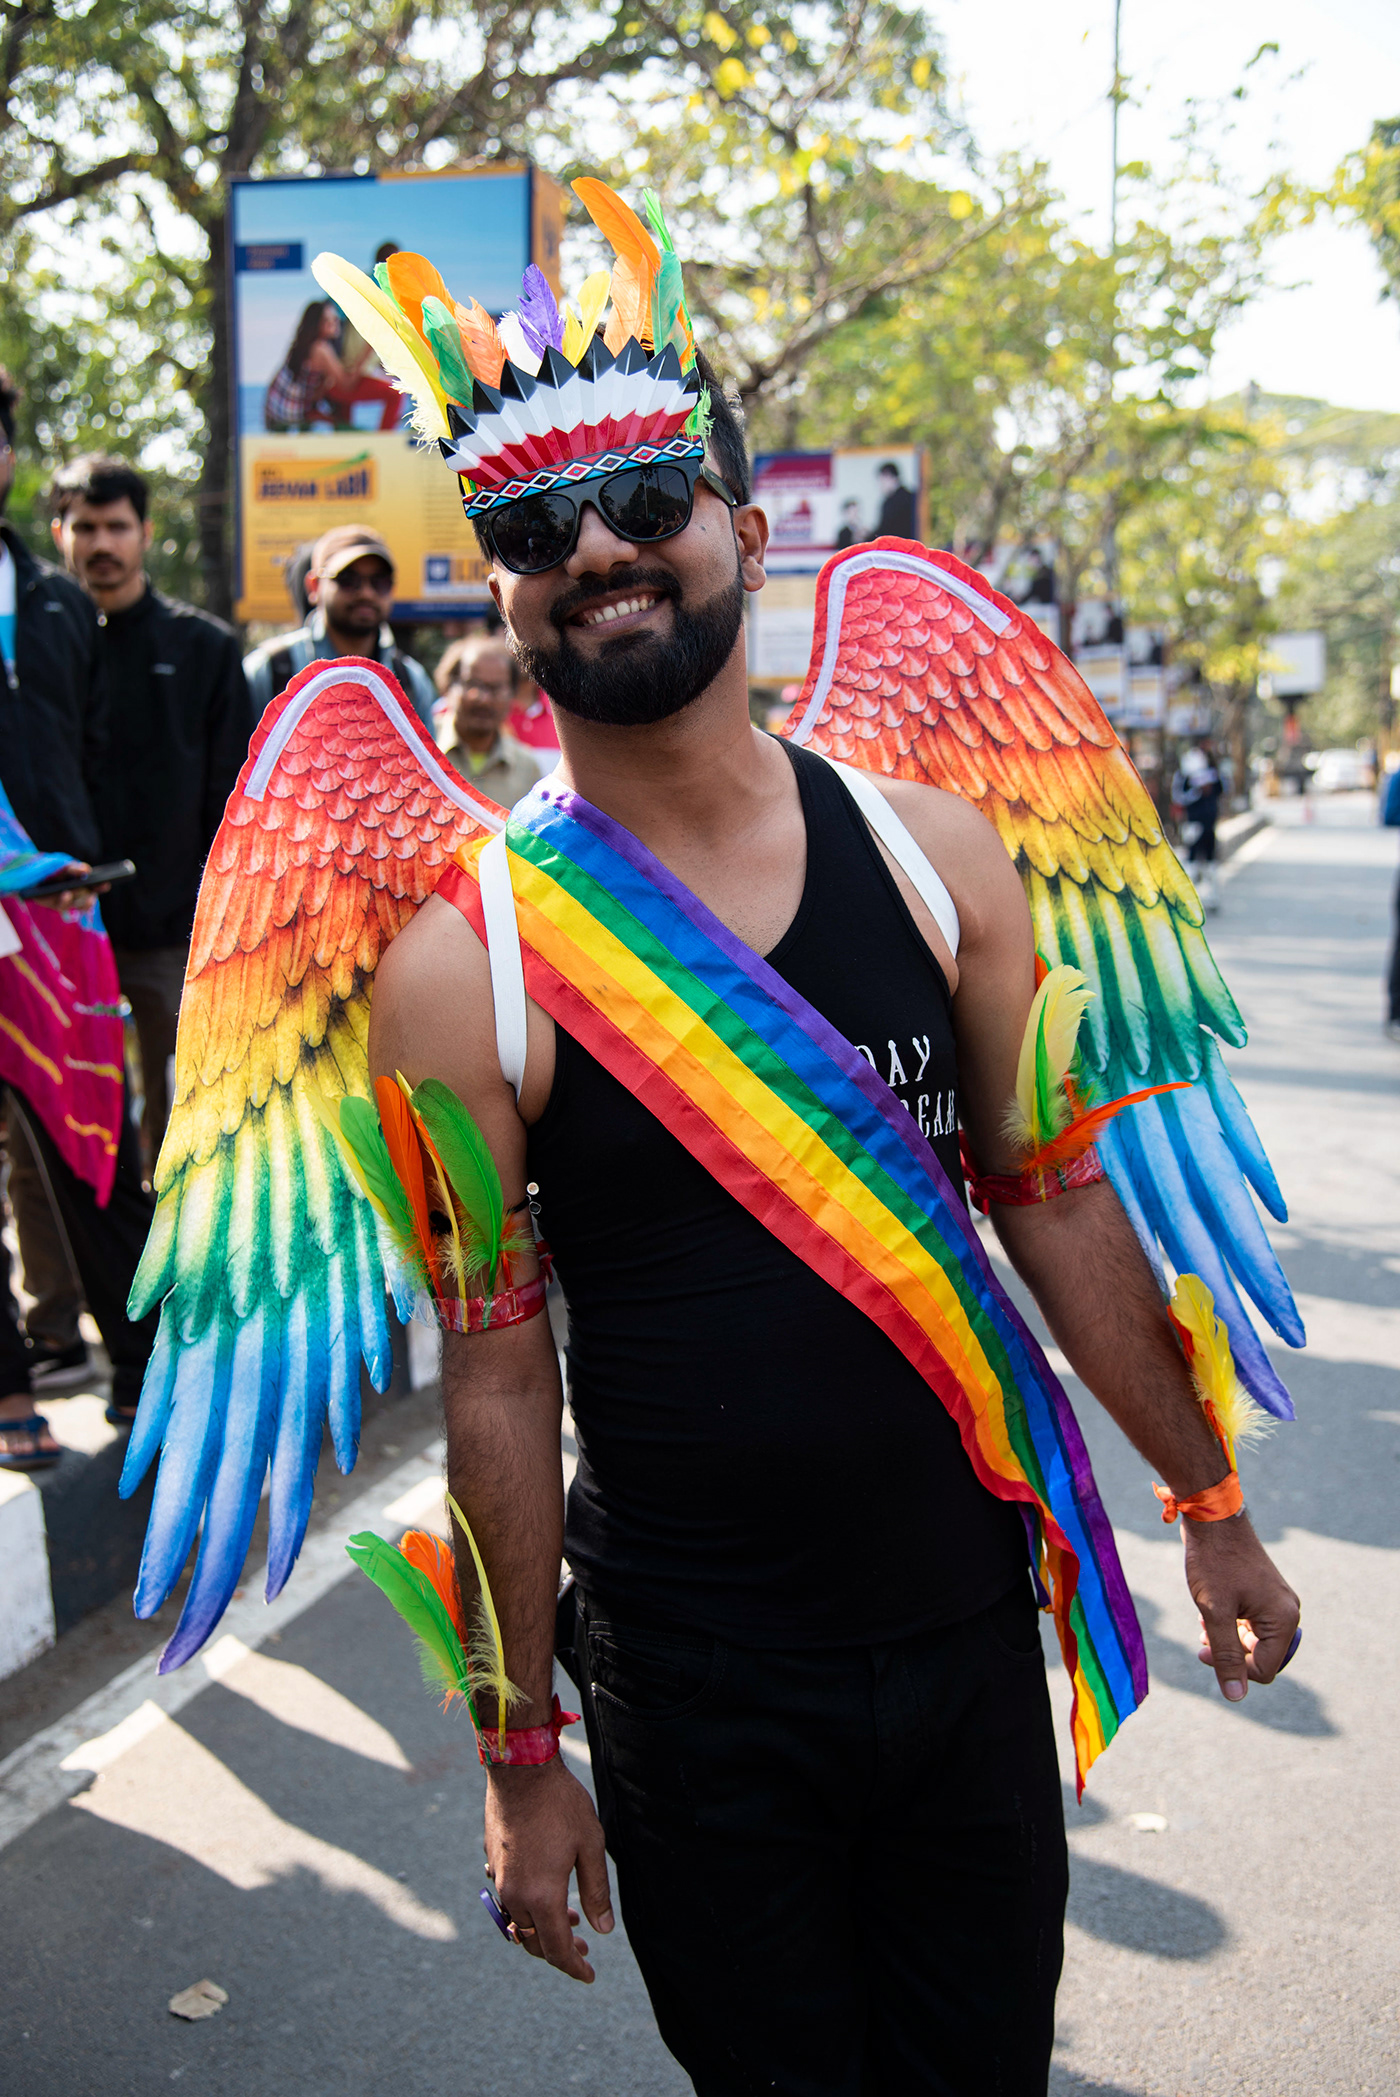 LGBTQI LGBT gay lesbian Pride Parade queer pride assam India people transgender